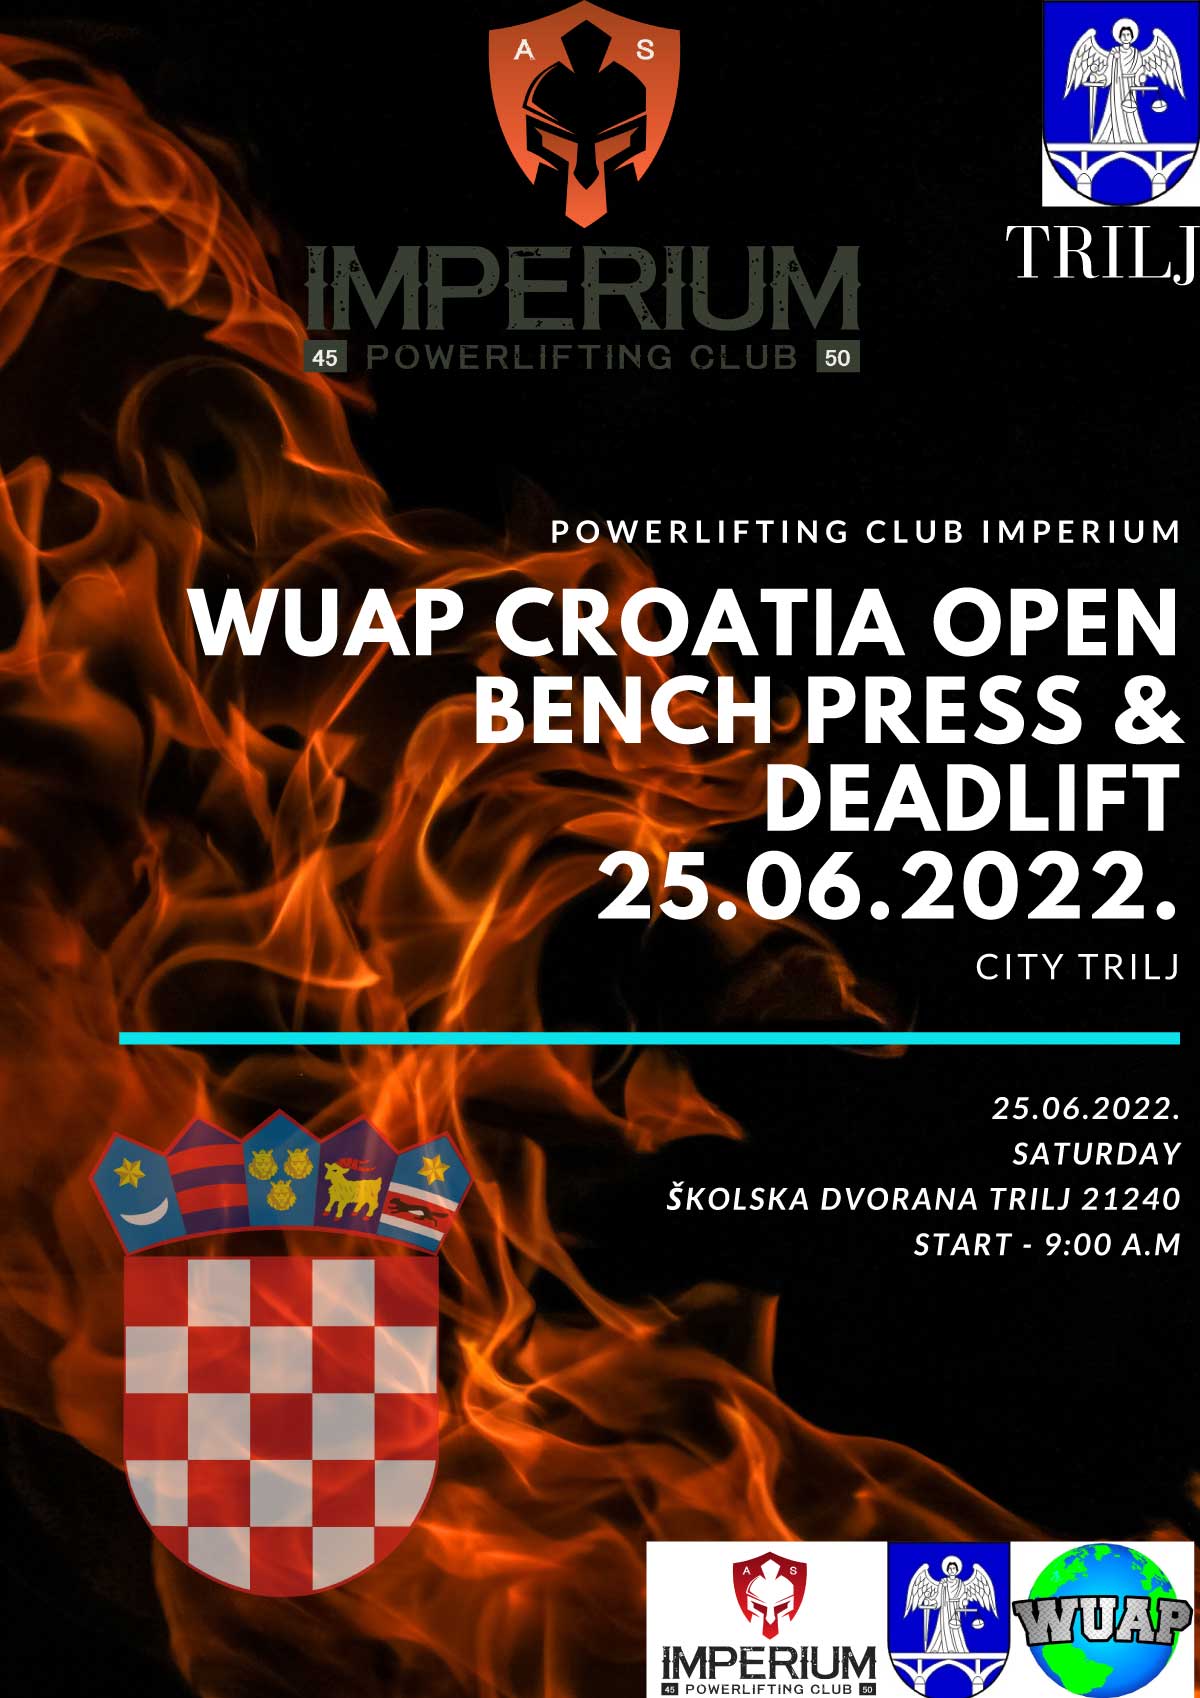 Wuap Croatia open bench press & deadlift